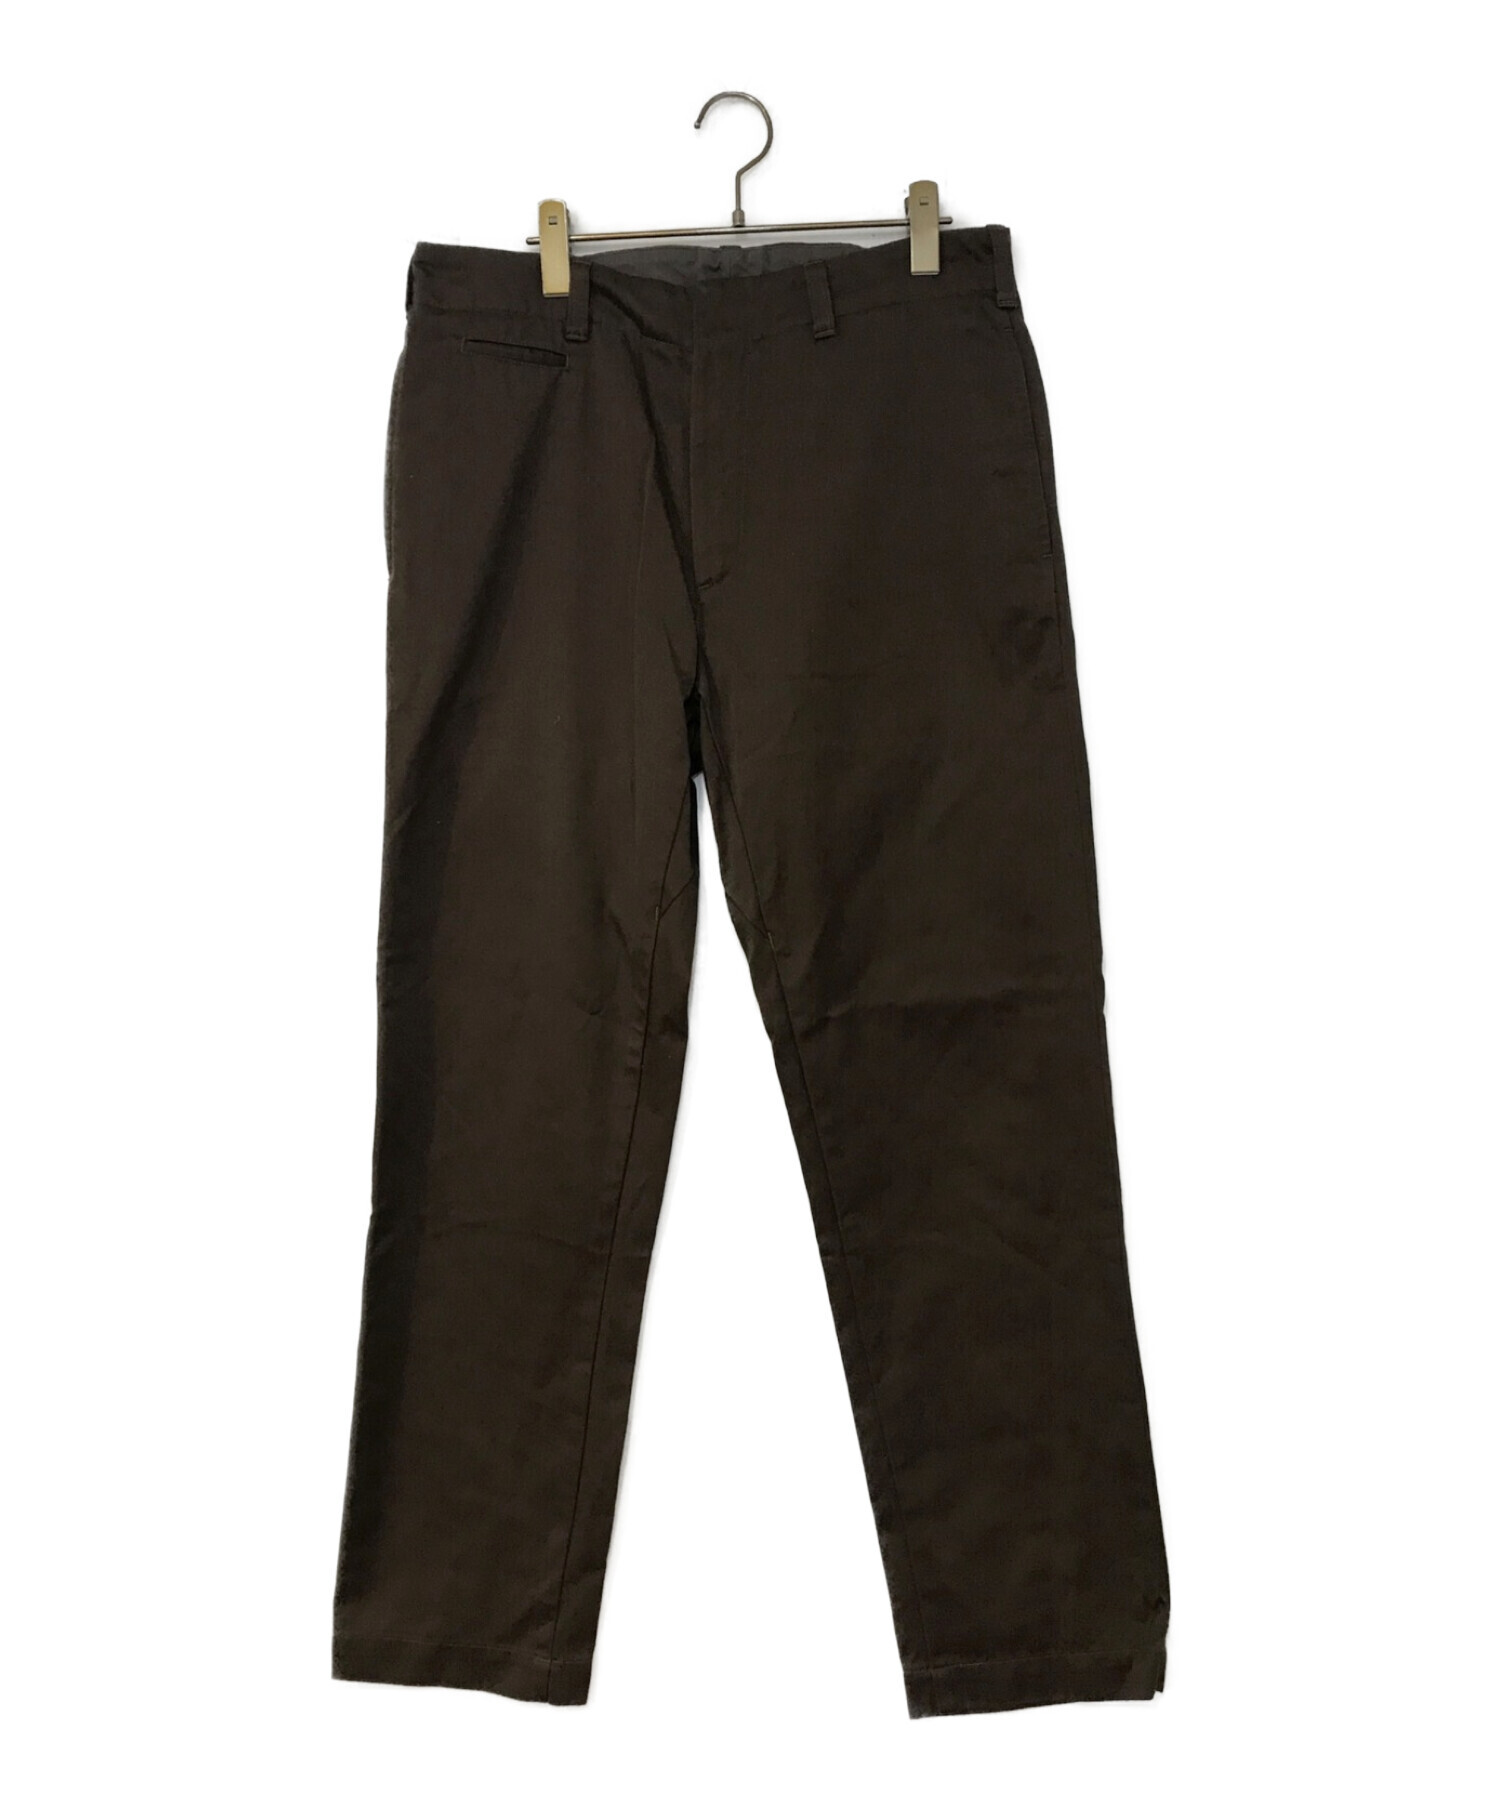 nanamica (ナナミカ) Straight Chino Pants ブラウン サイズ:32